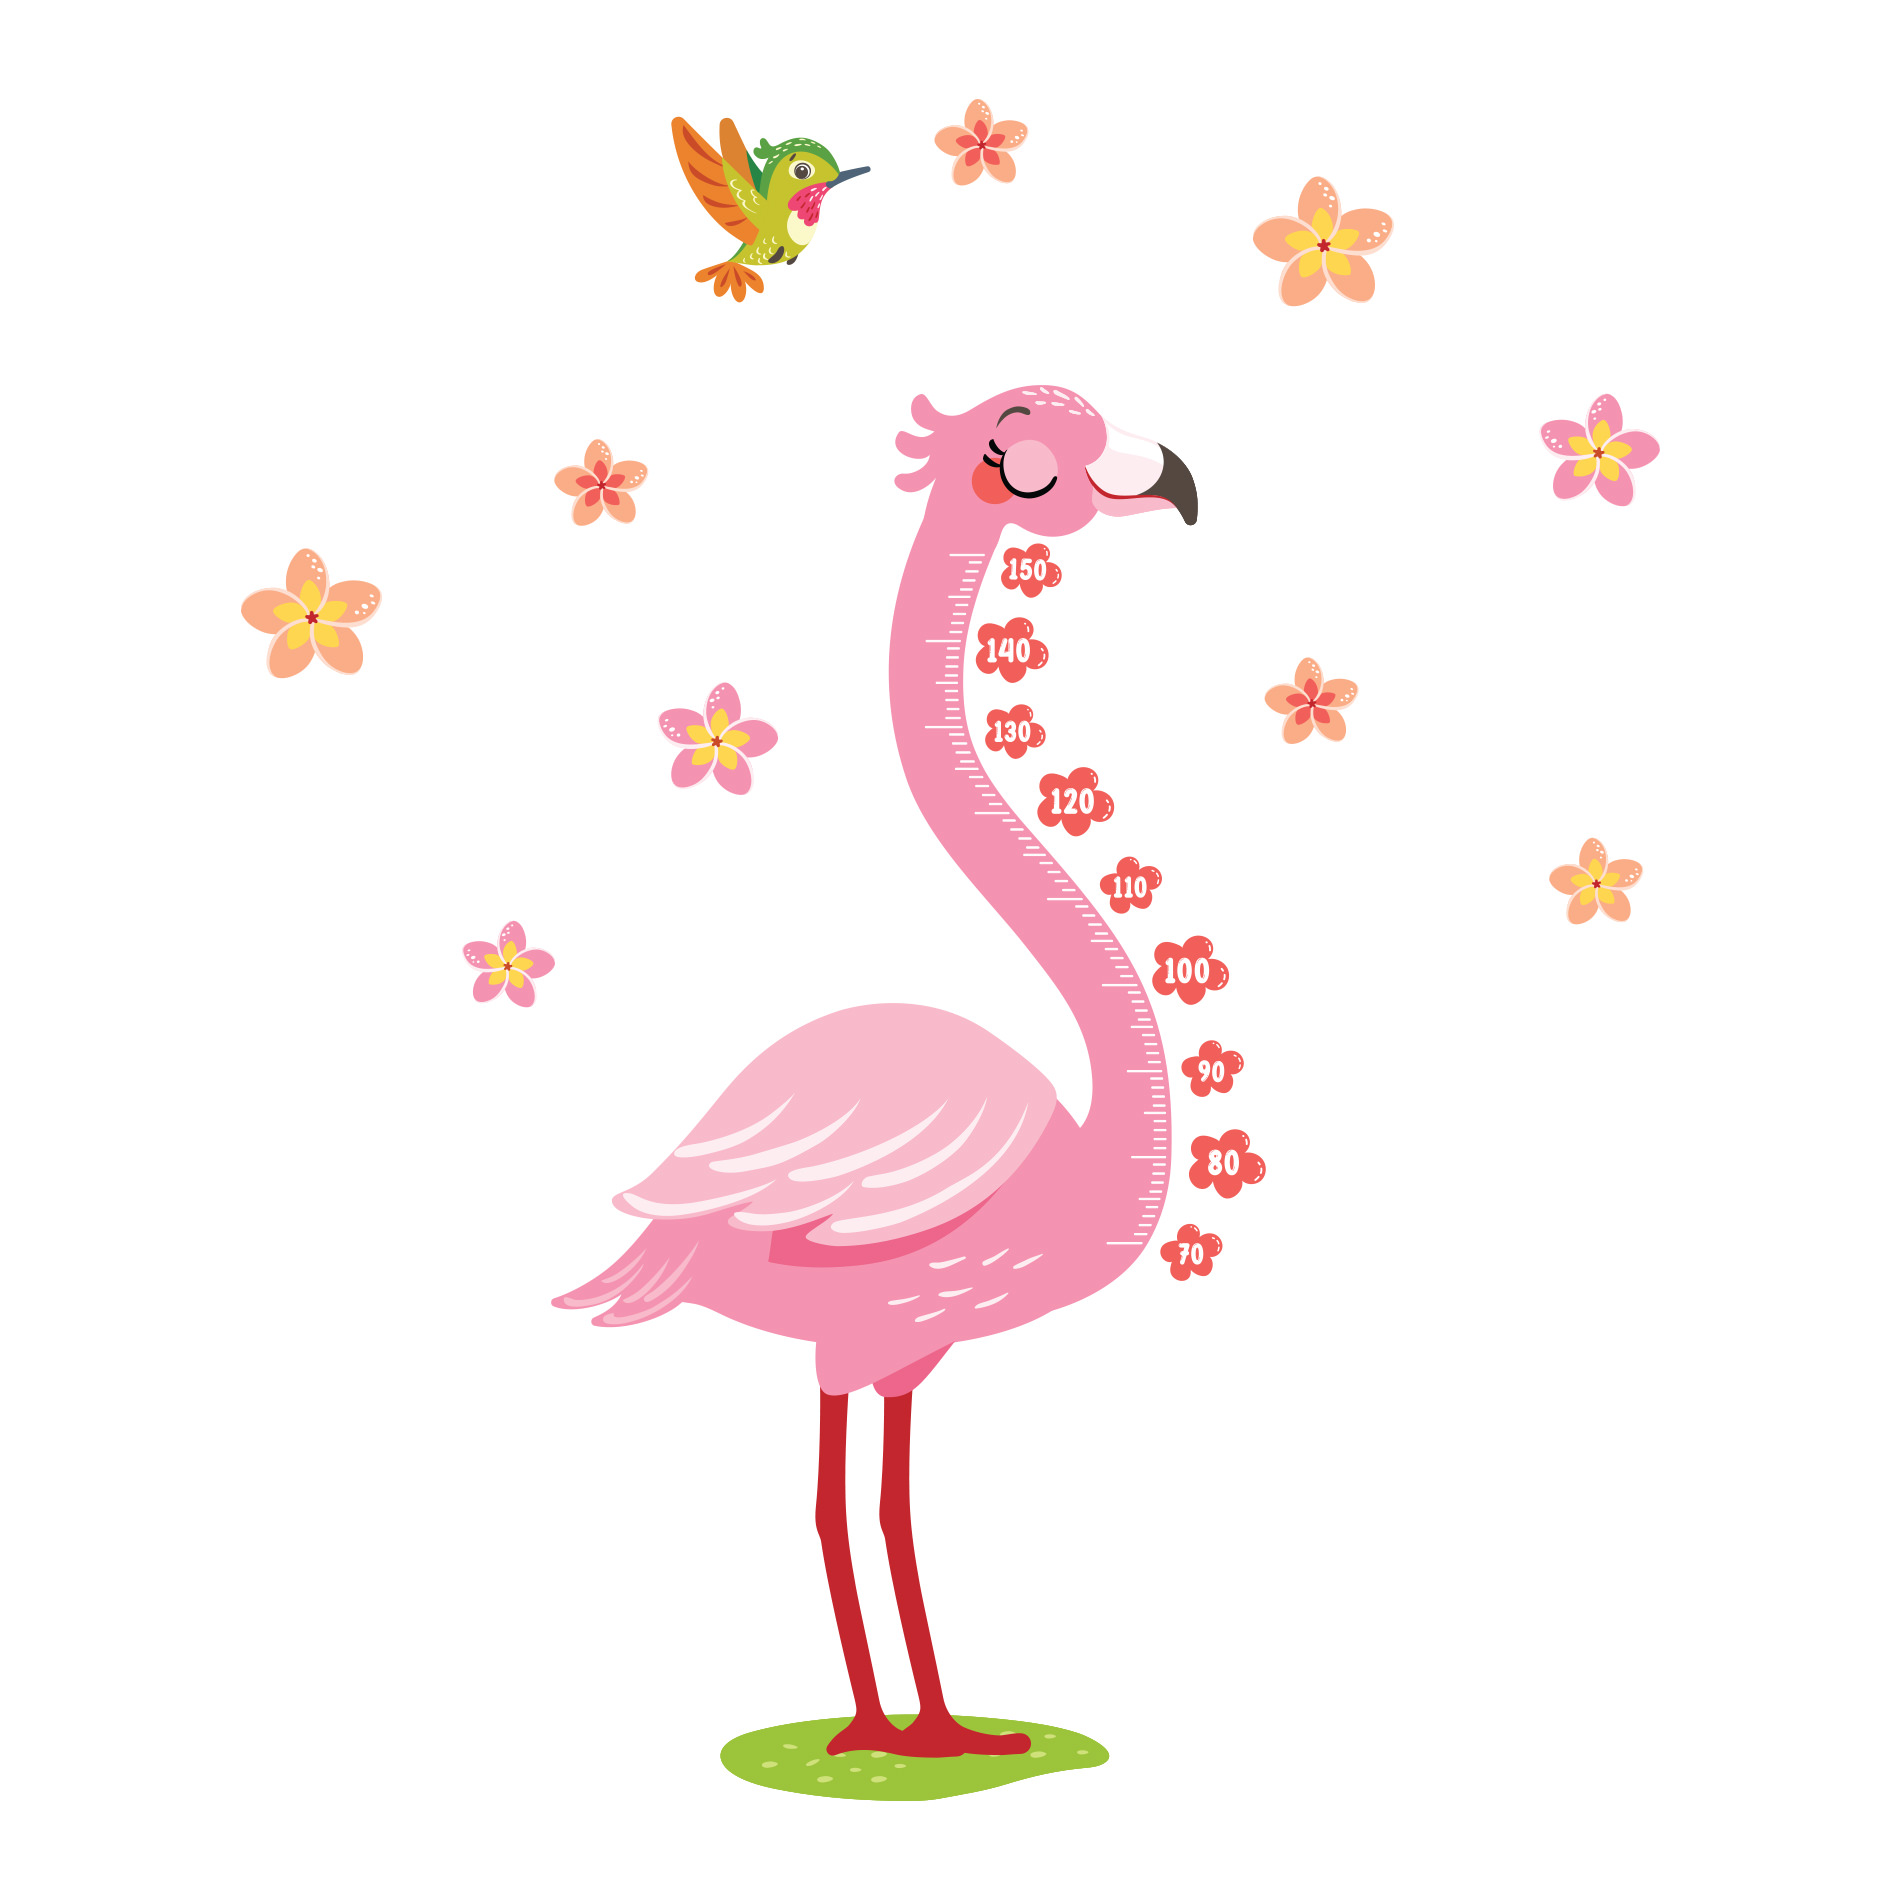 Adesivo de Parede Flamingo Régua de Crescimento 187x78cm